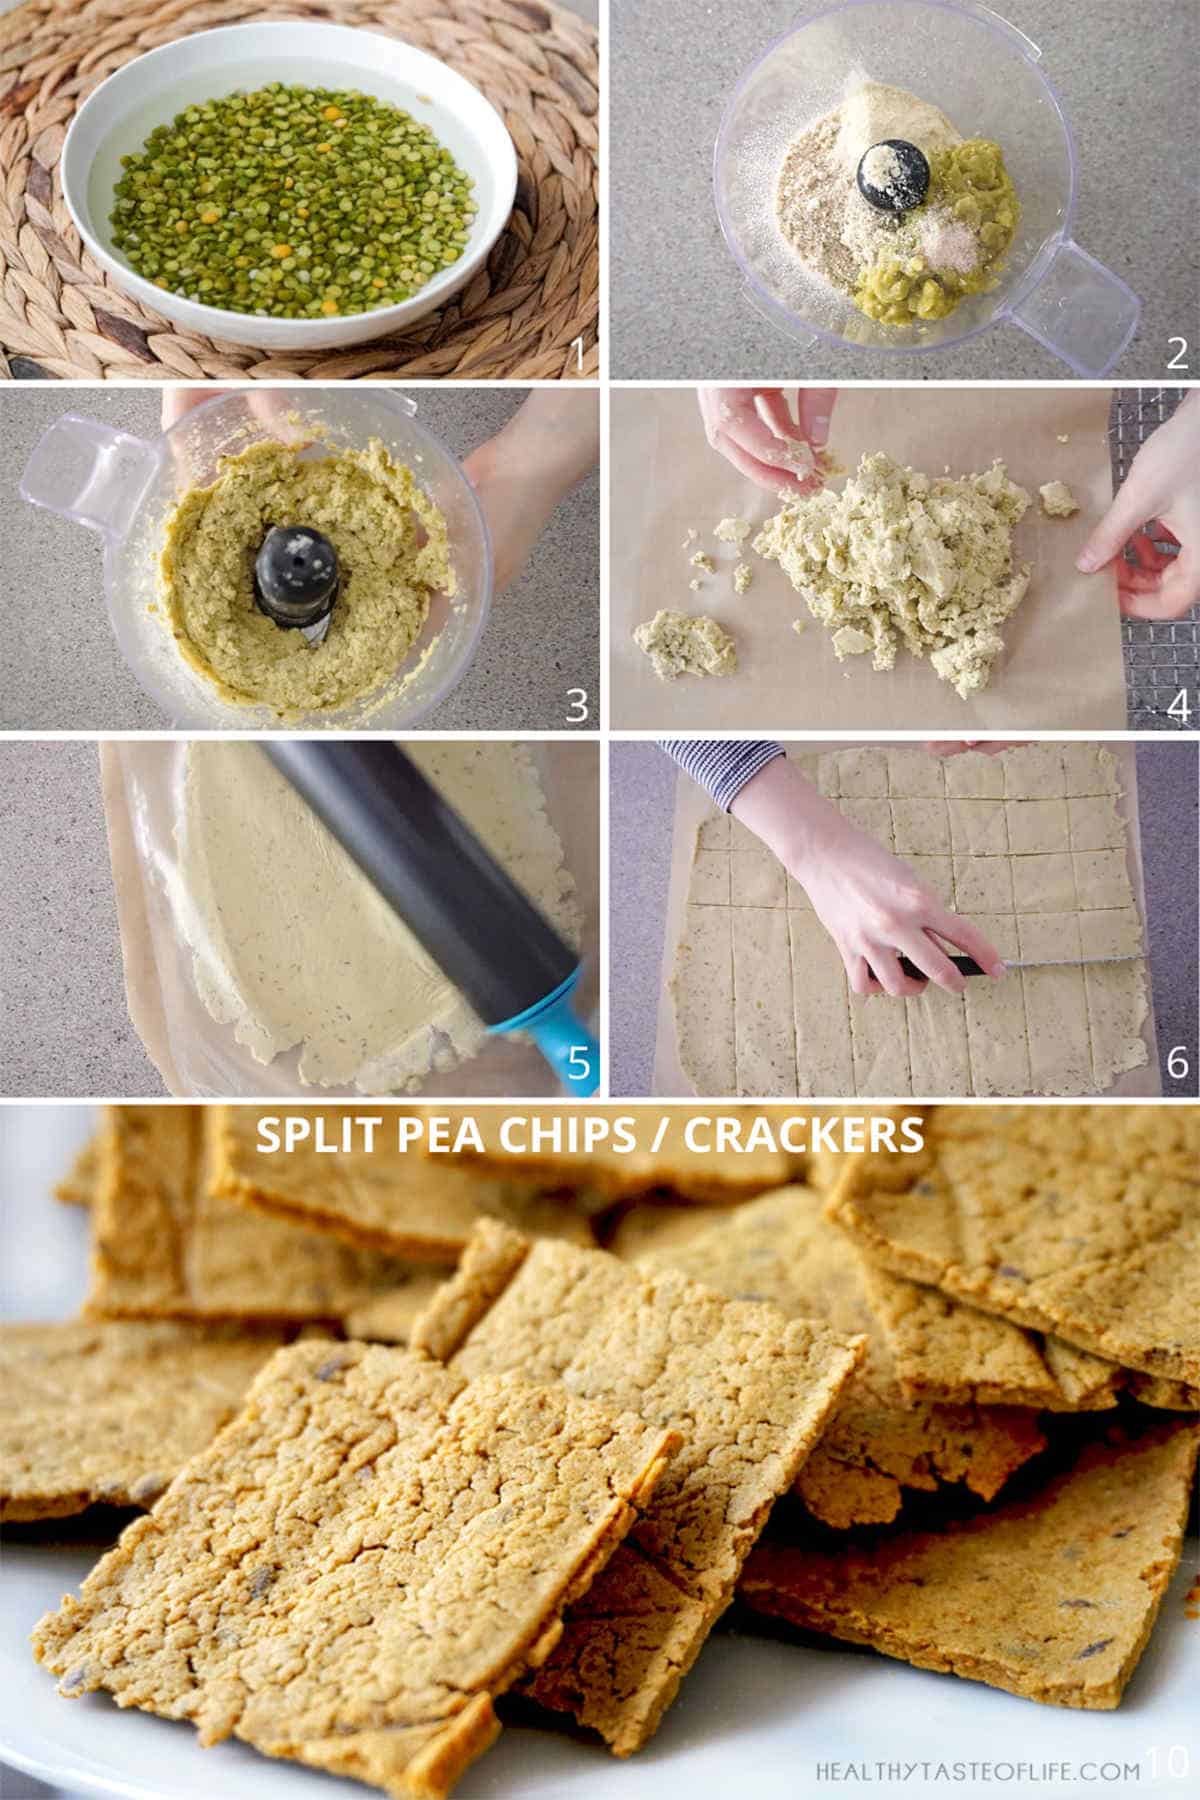 How To Make Pea Crackers / Split Pea Crackers, Chips Recipe #vegan #glutenfree #crackers #splitpeas #splitpearecipes